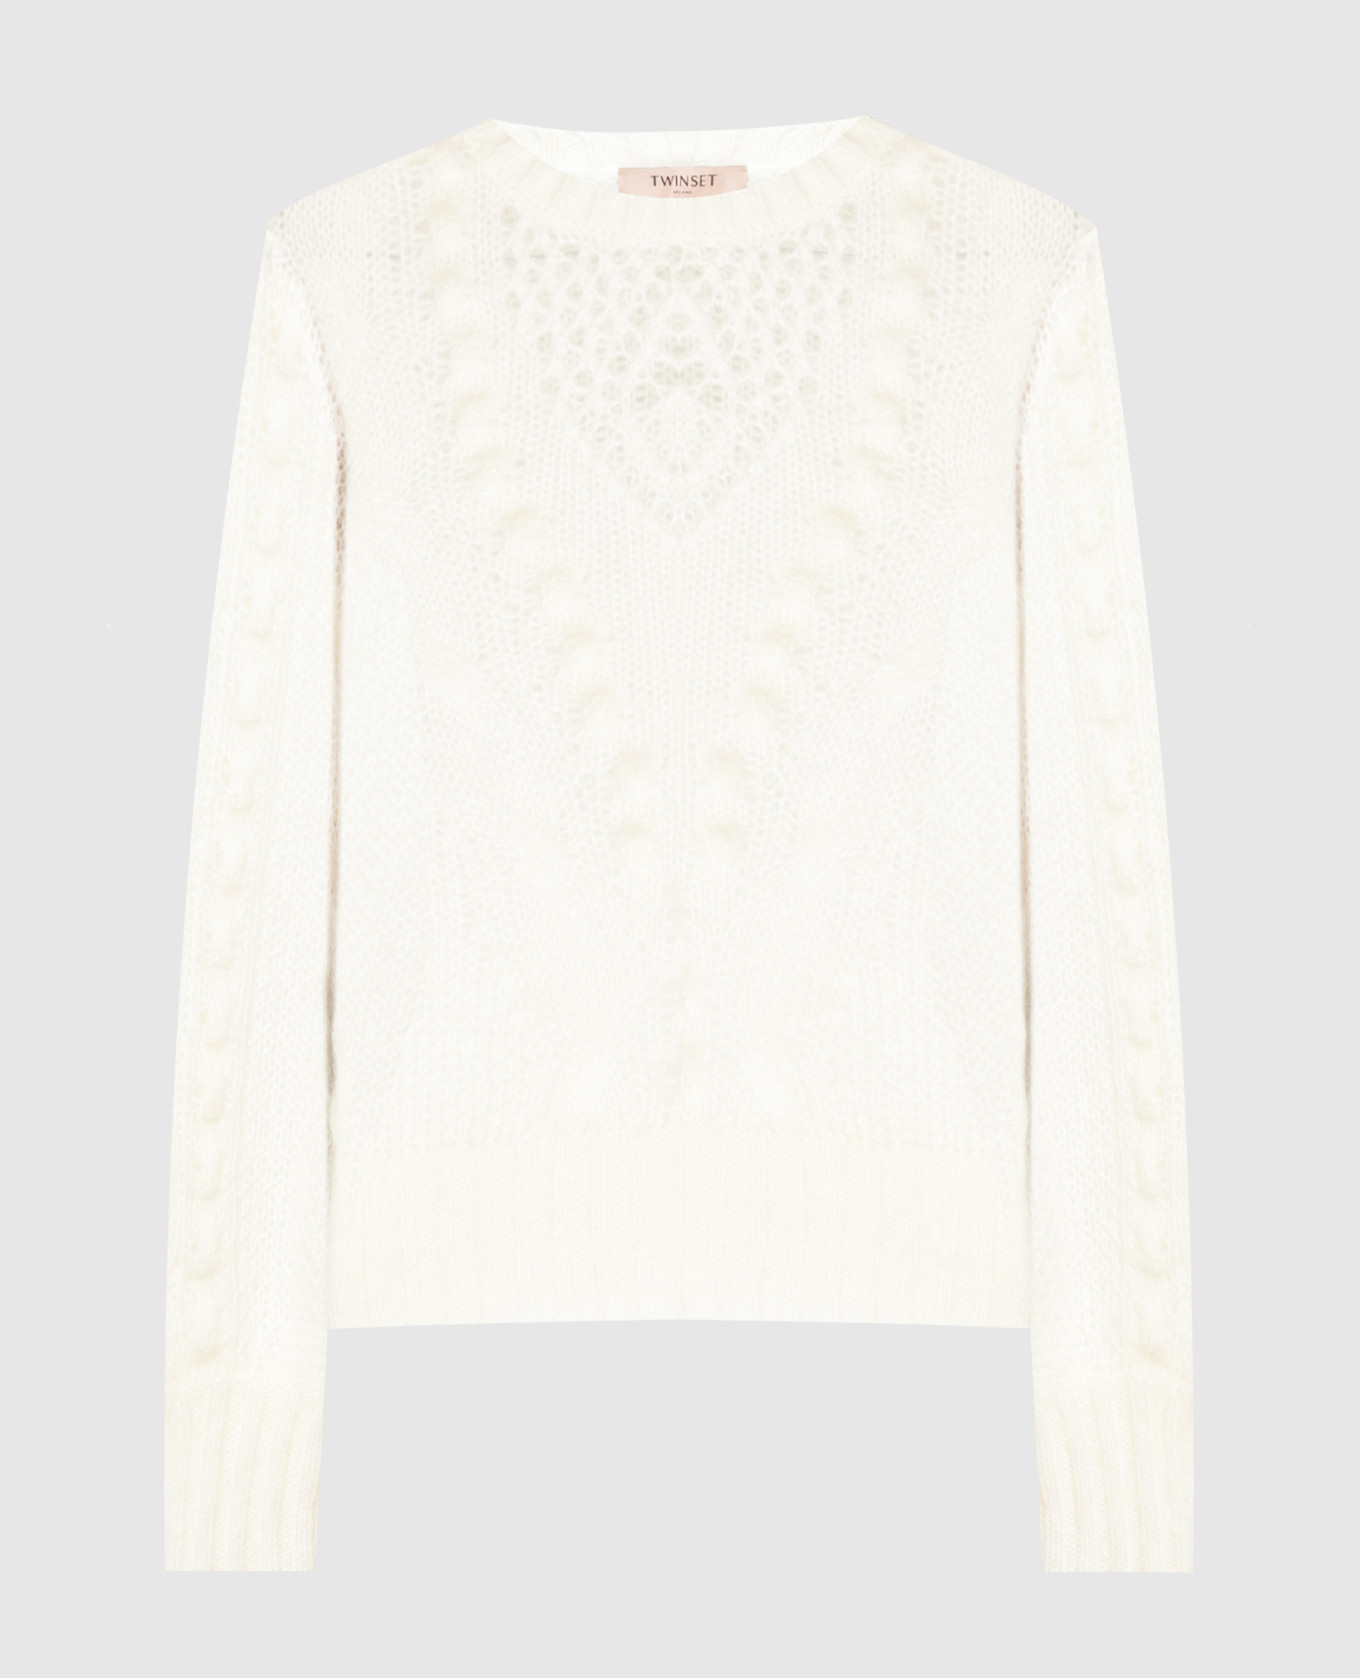 White openwork sweater in a pattern